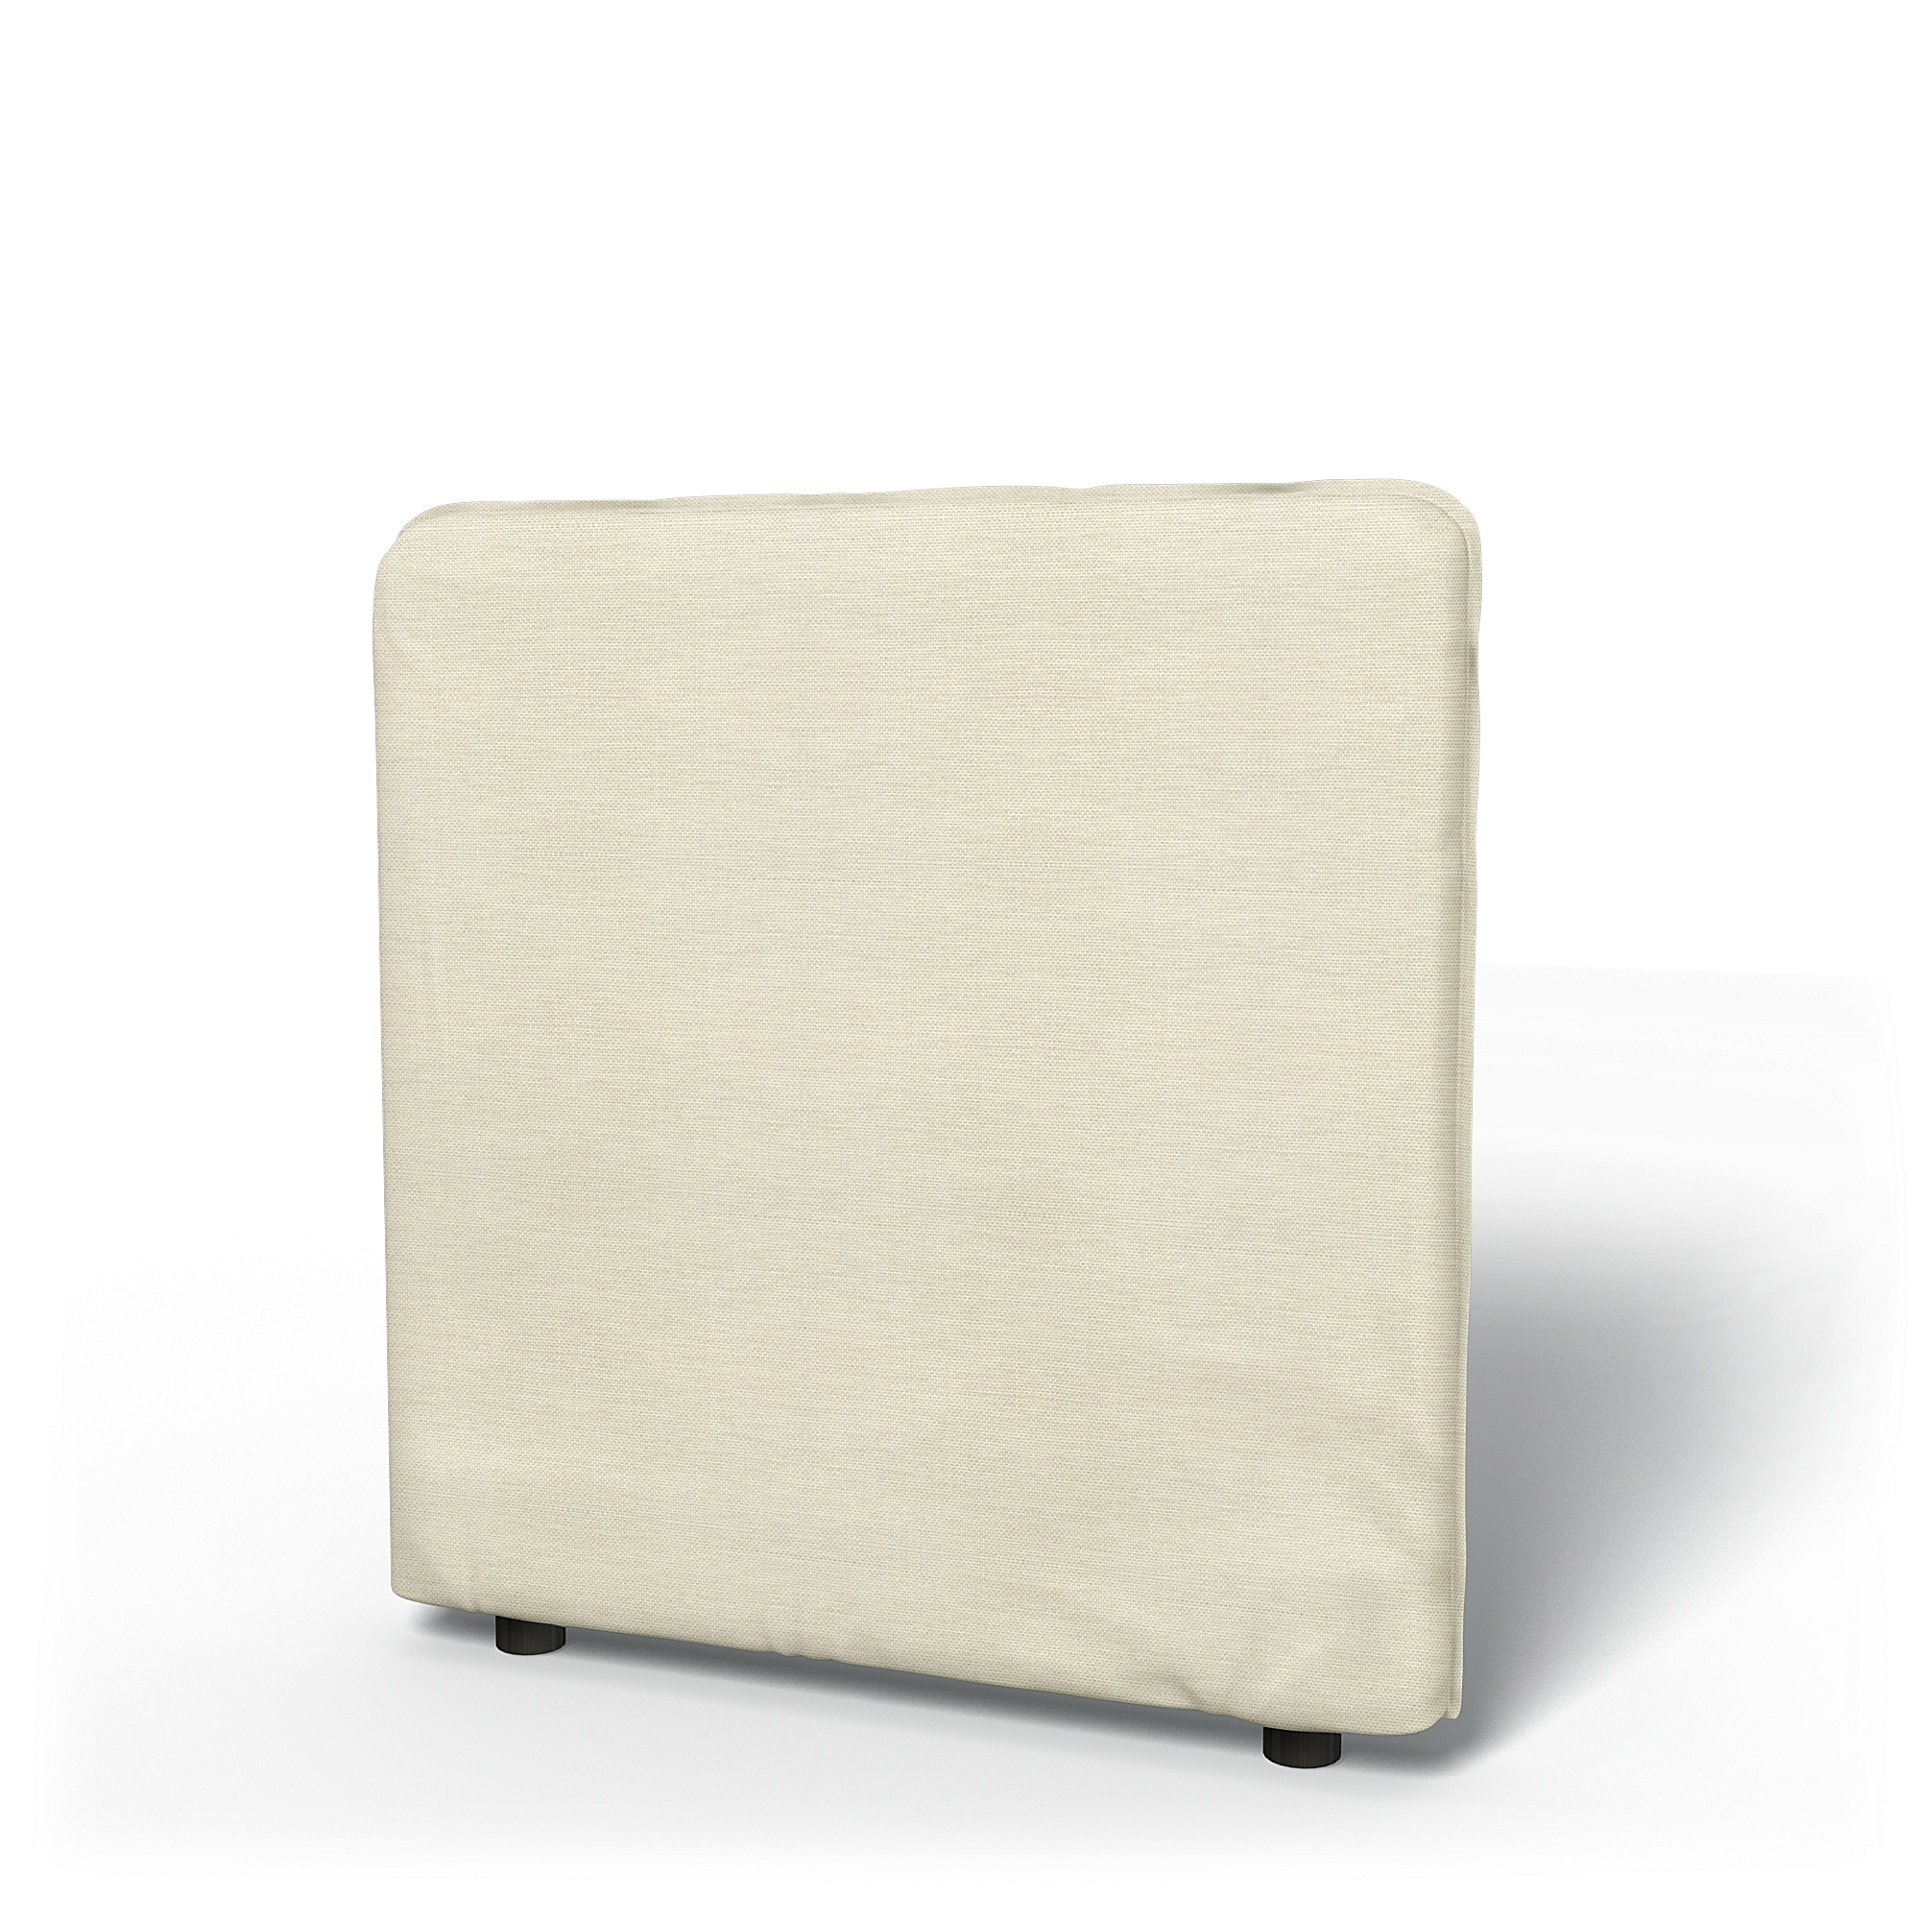 IKEA - Vallentuna Low Backrest Cover 80x80cm 32x32in, Sand Beige, Cotton - Bemz